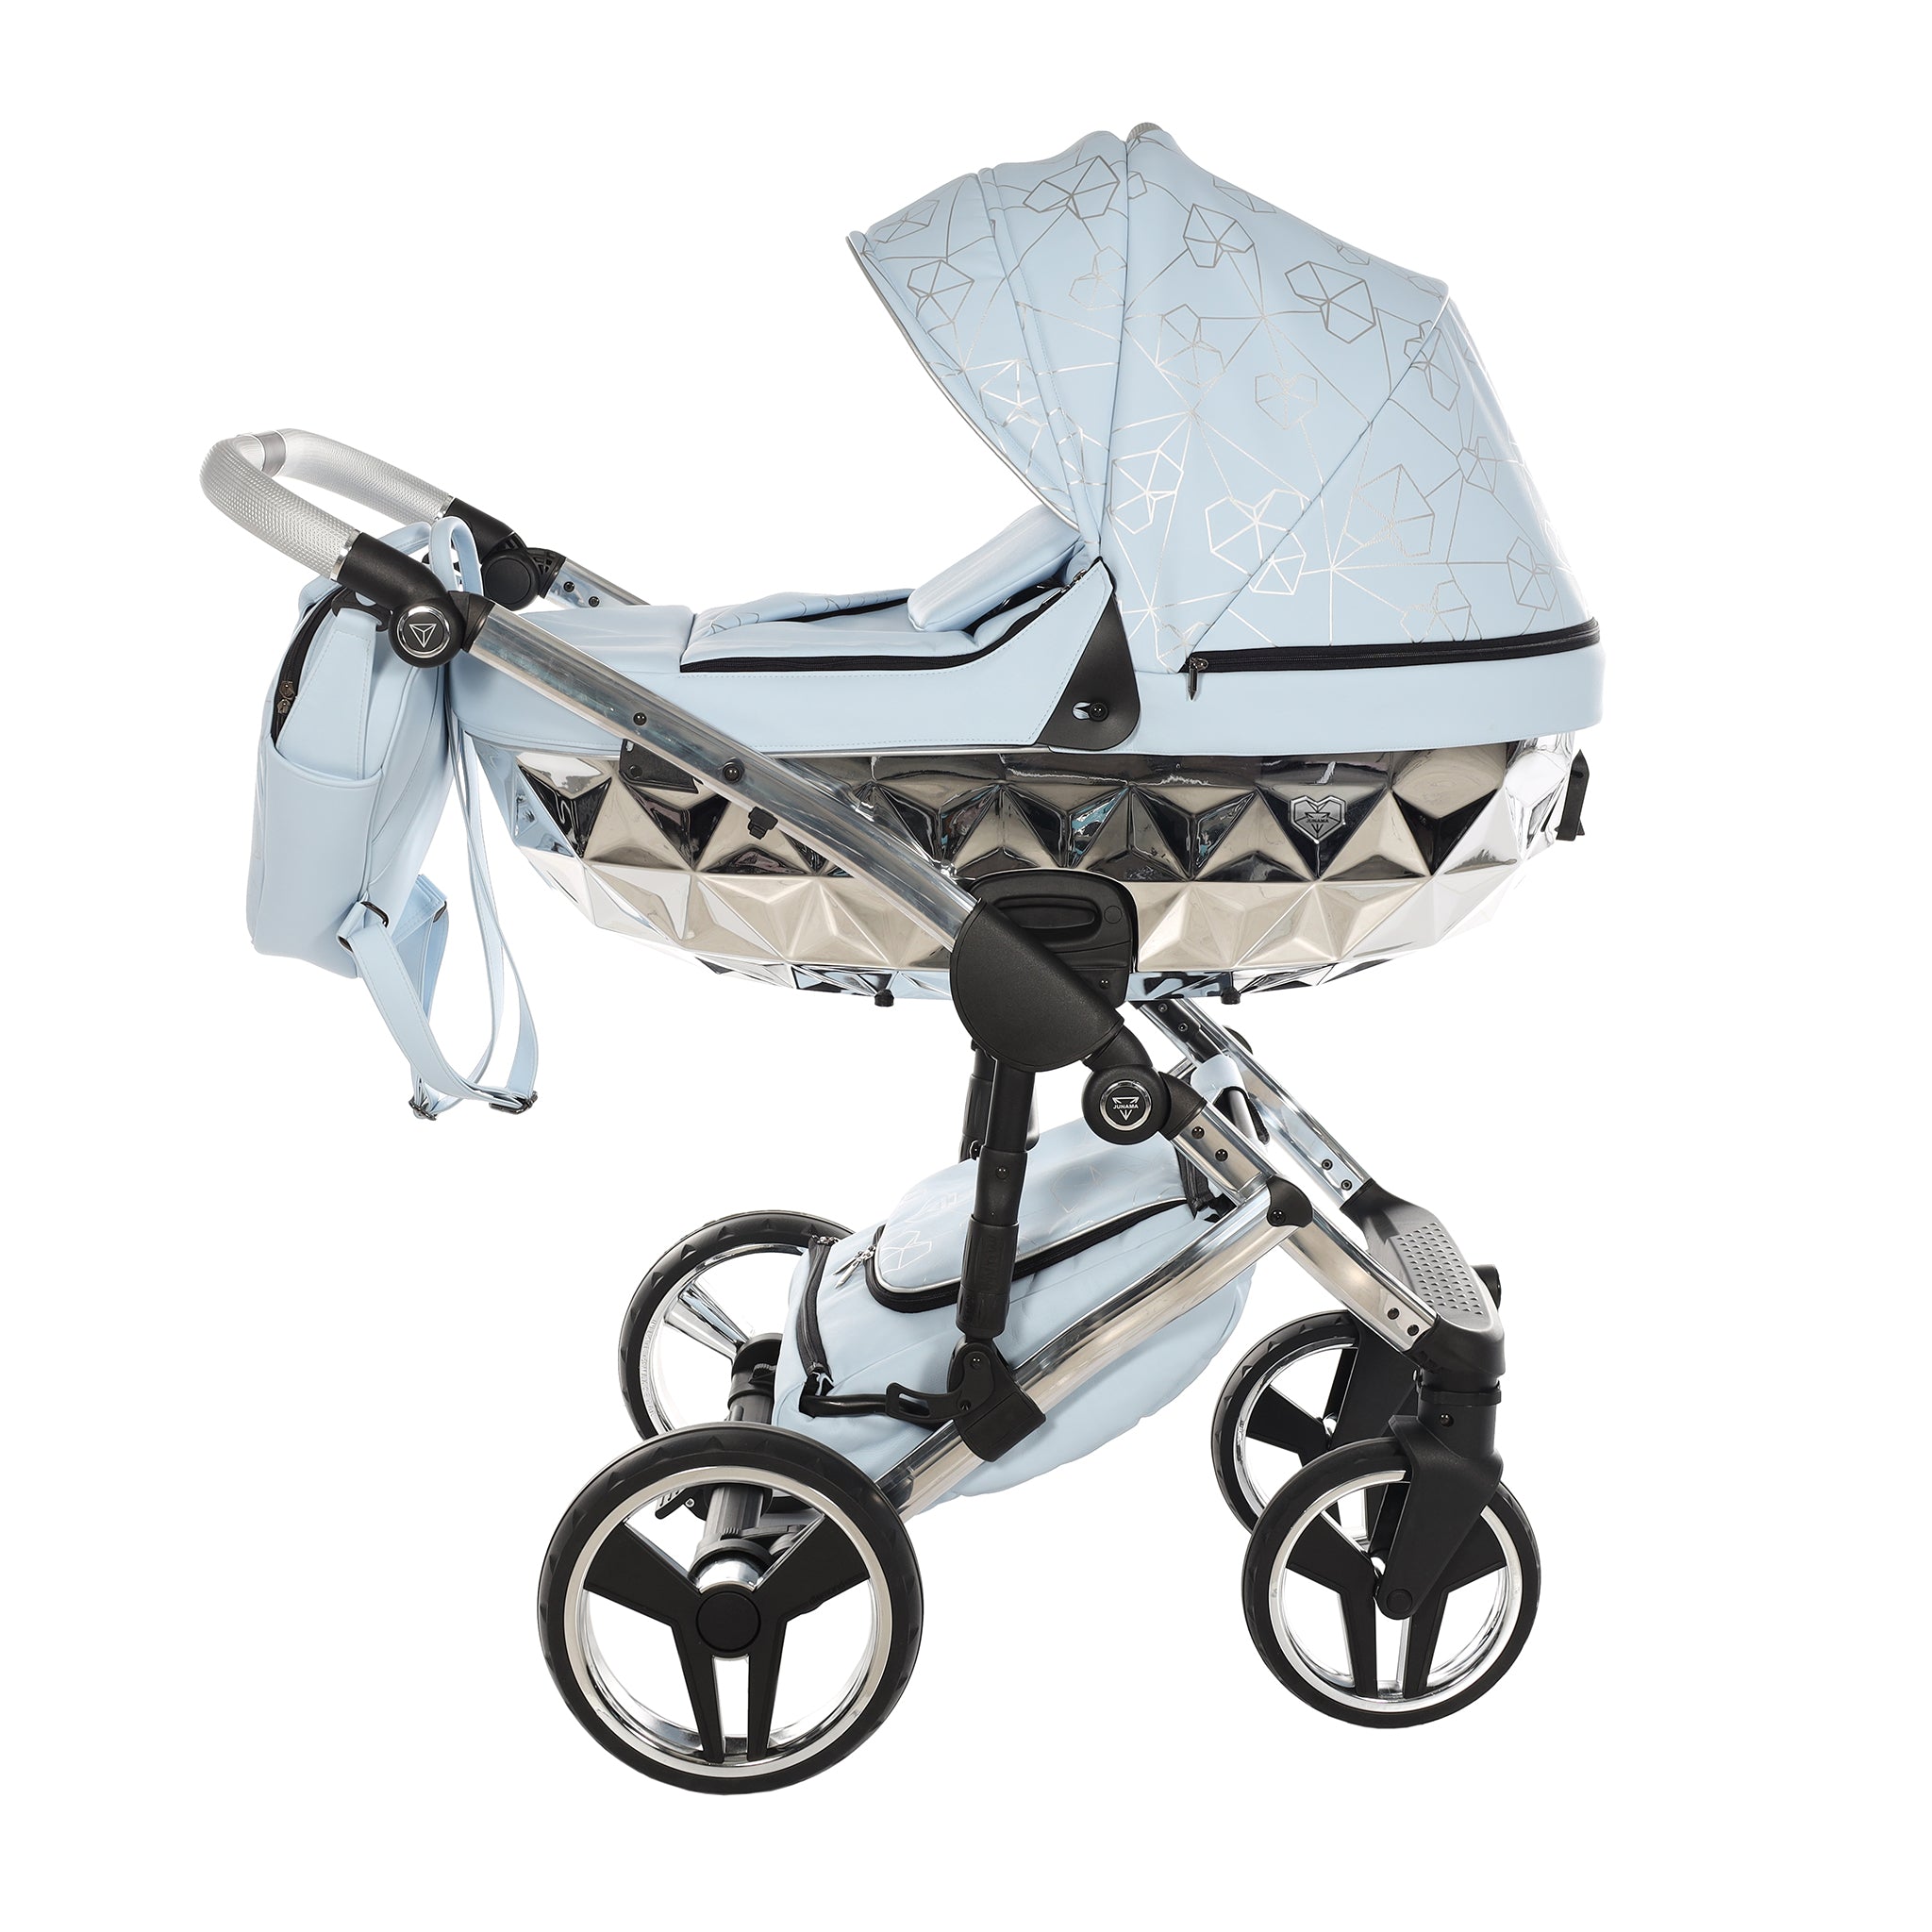 Junama Heart, baby prams or stroller 2 in 1 - Blue and Silver, Code number: JUNHERT08